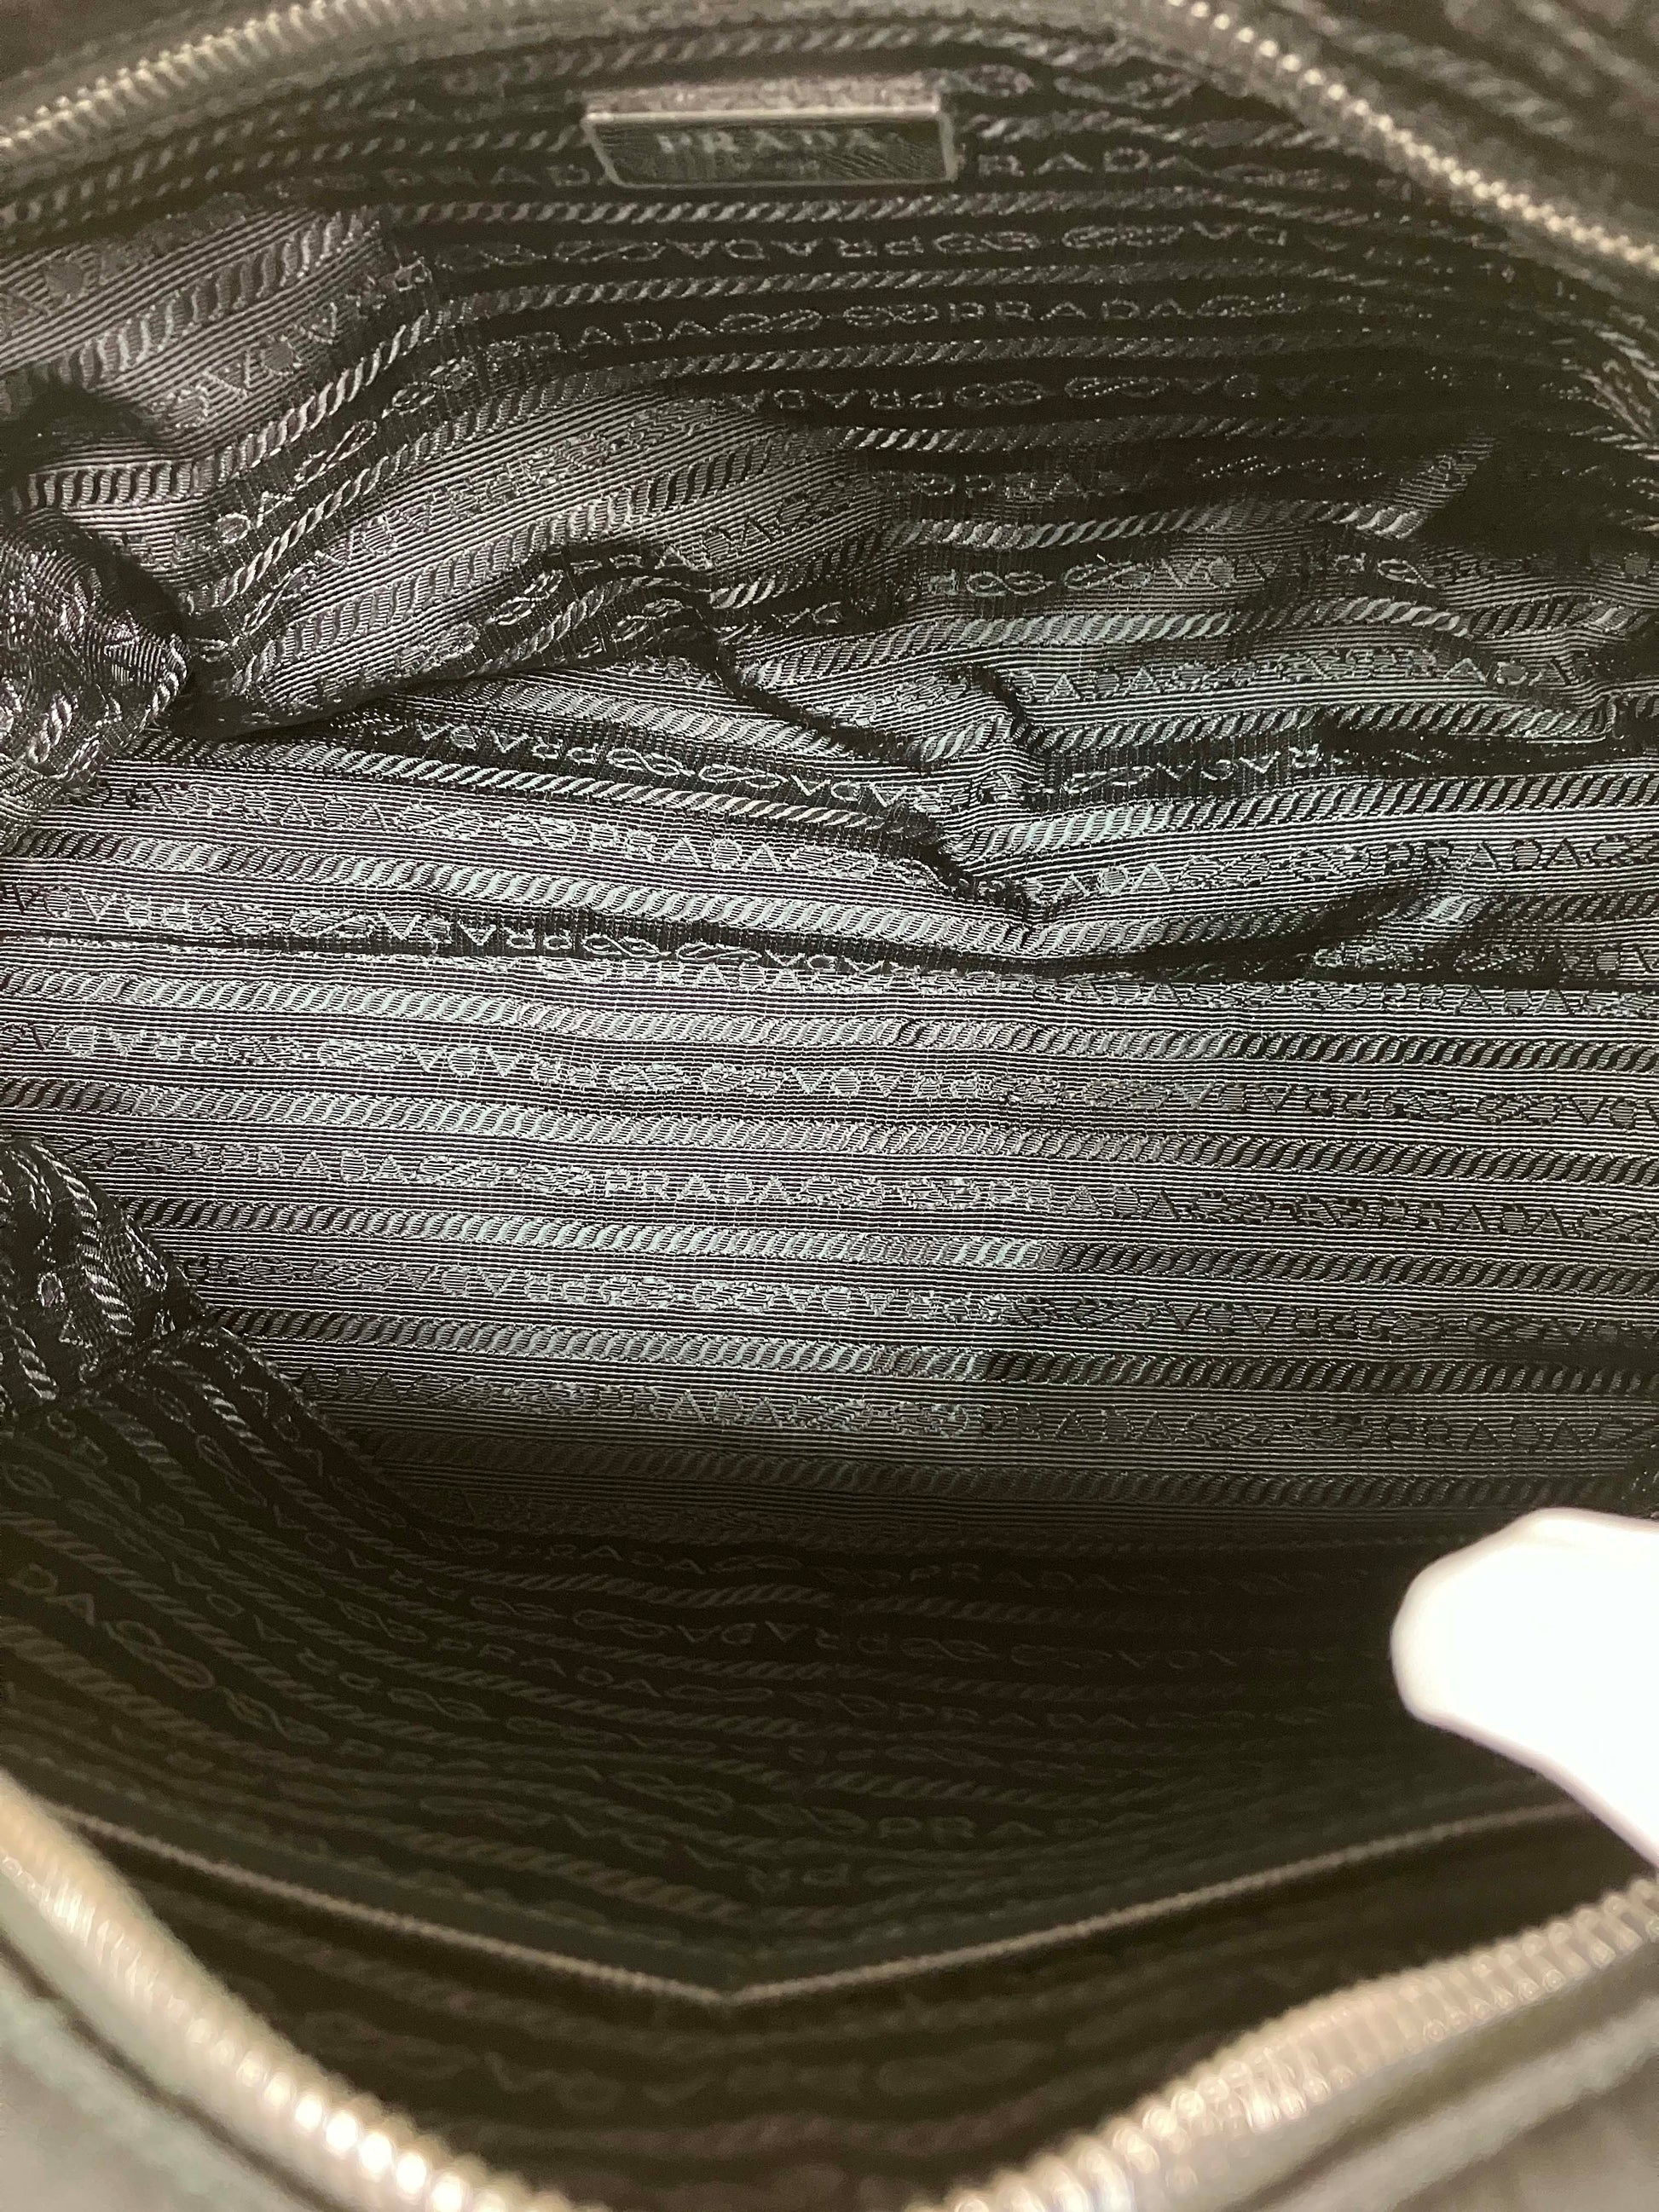 Prada Tessuto Impuntu Pattina Quilted Nylon Shoulder Bag BT1025, Black/Nero  : : Clothing, Shoes & Accessories